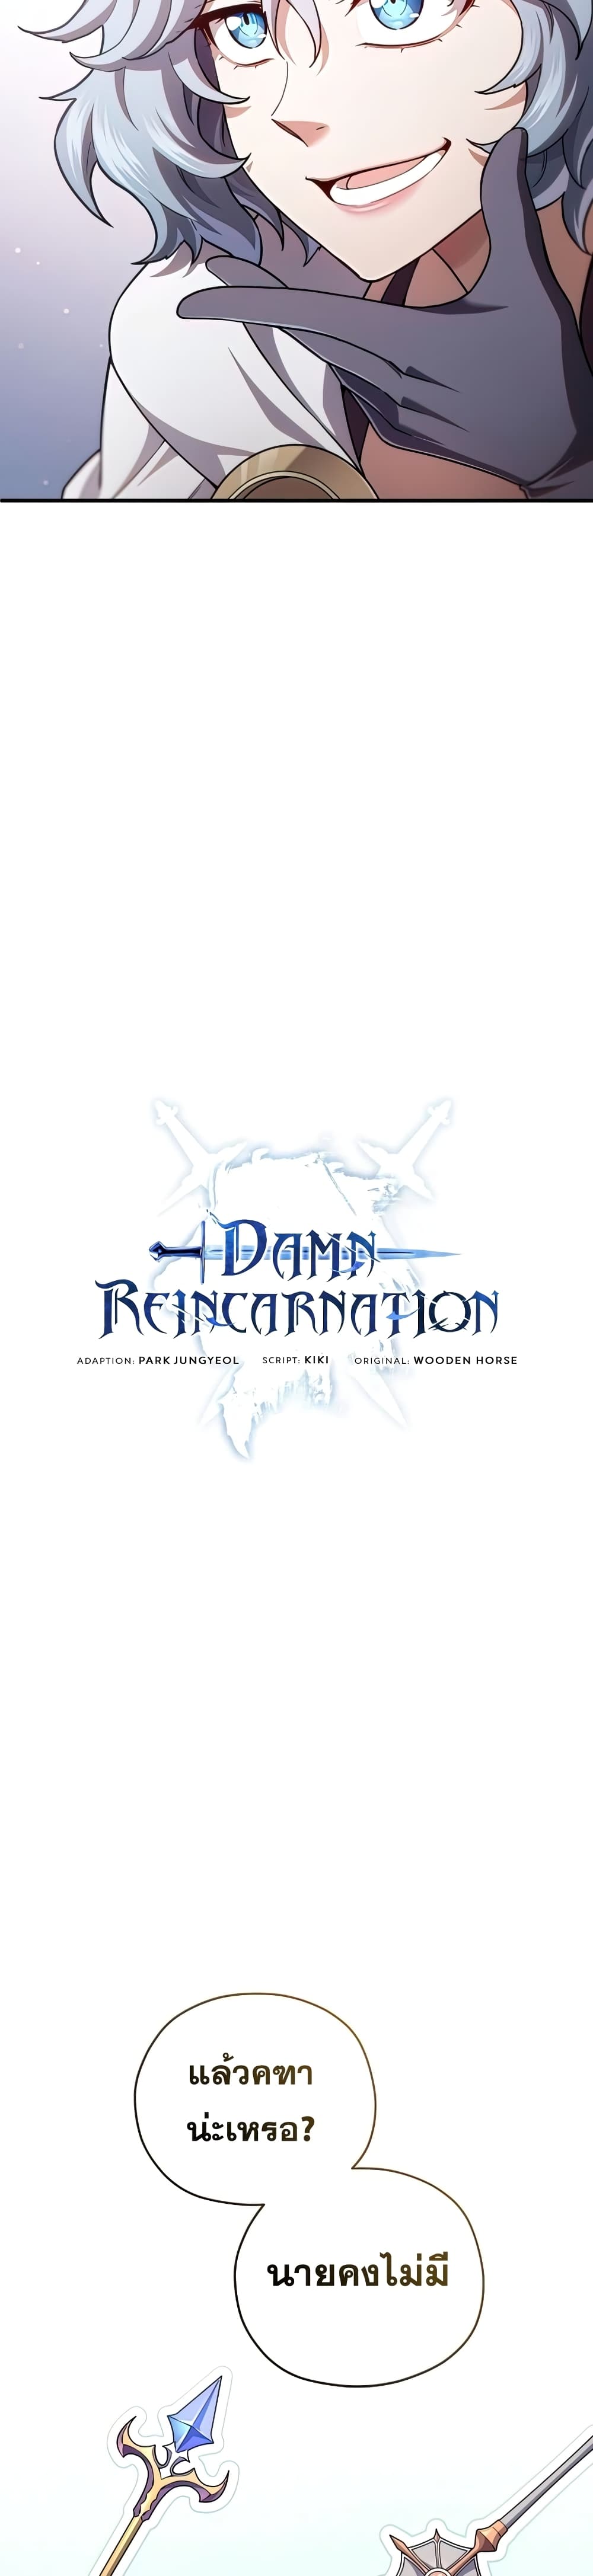 Damn Reincarnation 41-41